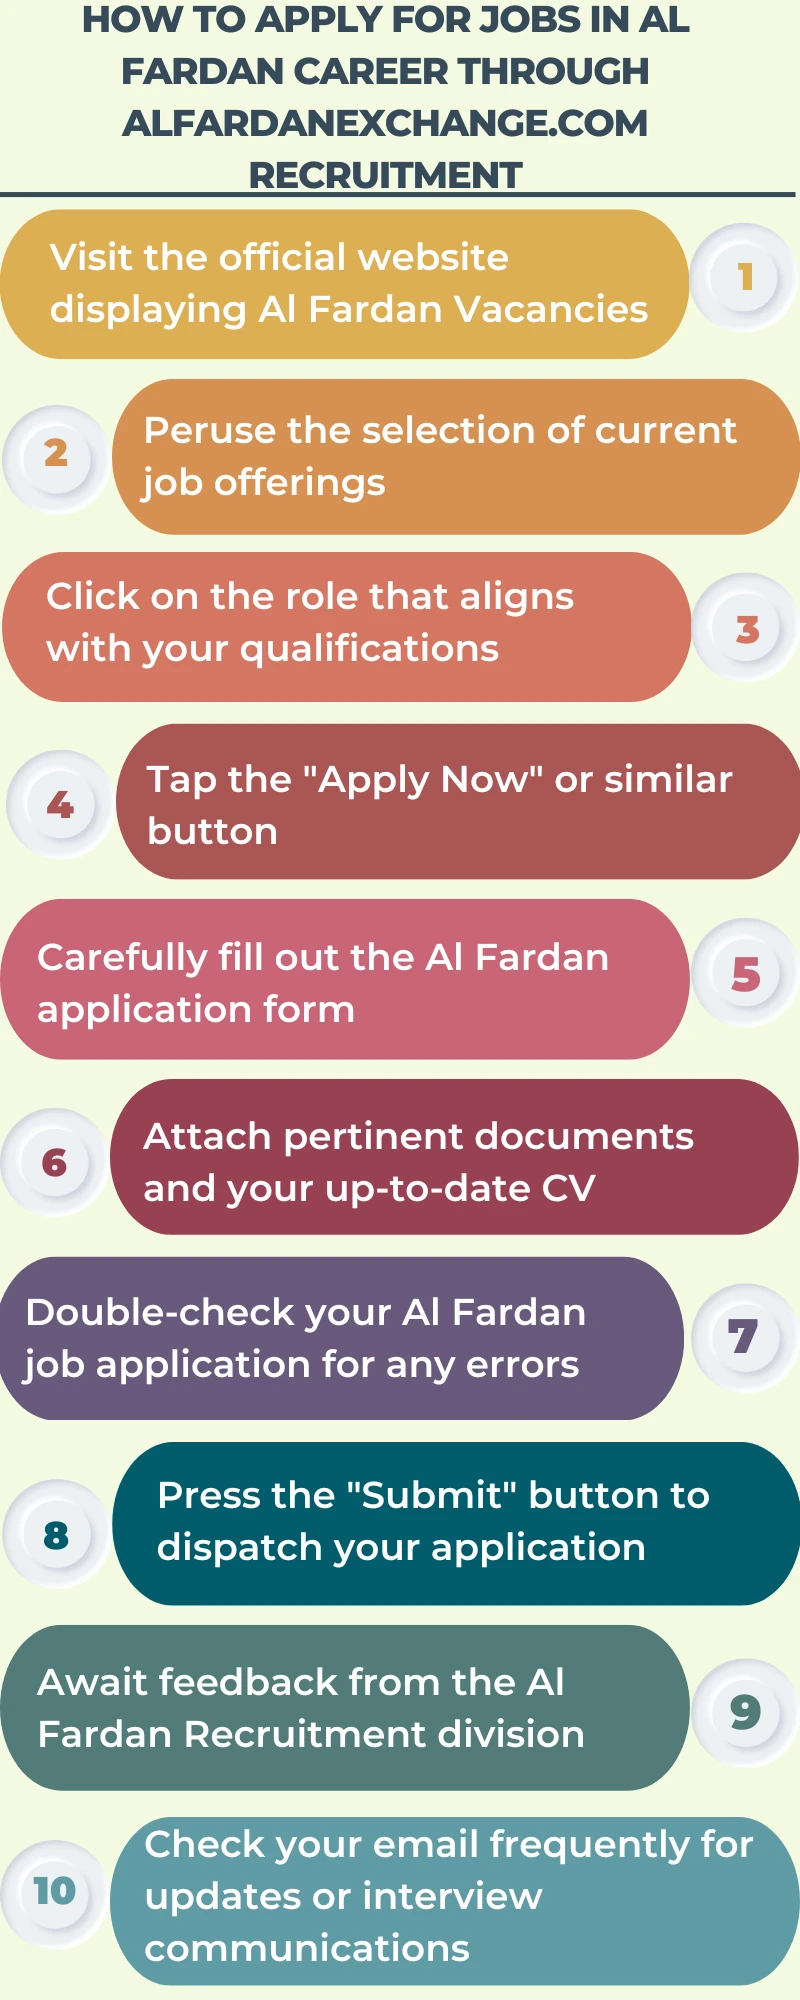 How to Apply for Jobs in Al Fardan Career through alfardanexchange.com recruitment